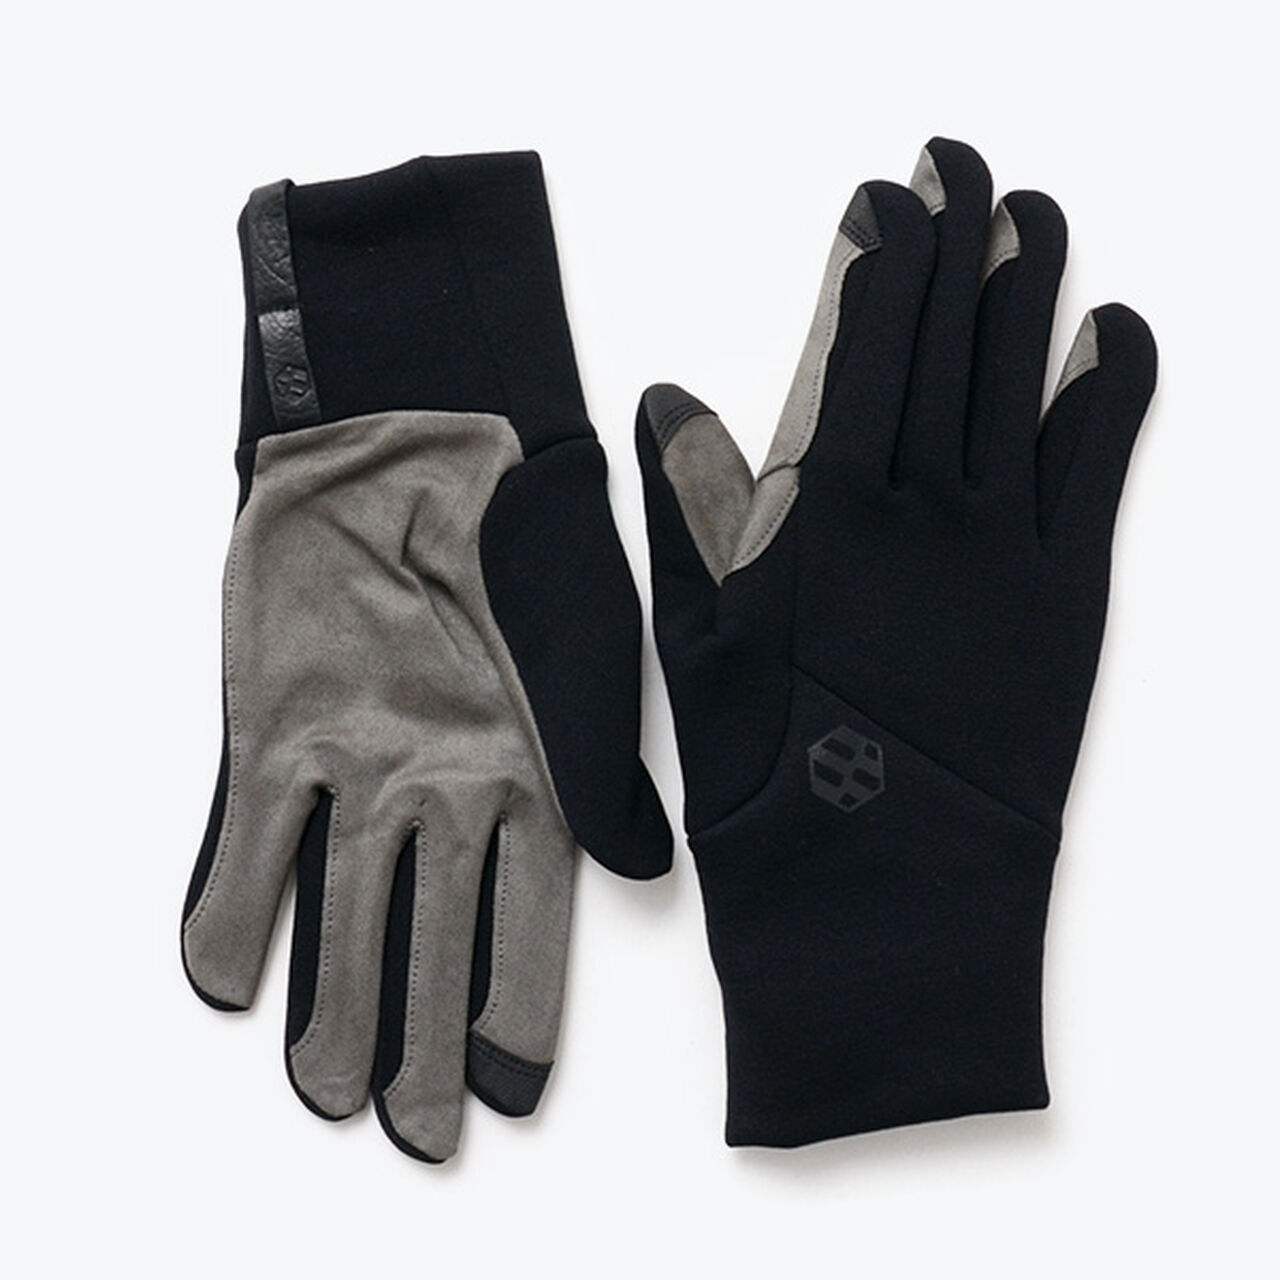 tracker/outdoor glove,Black, large image number 0